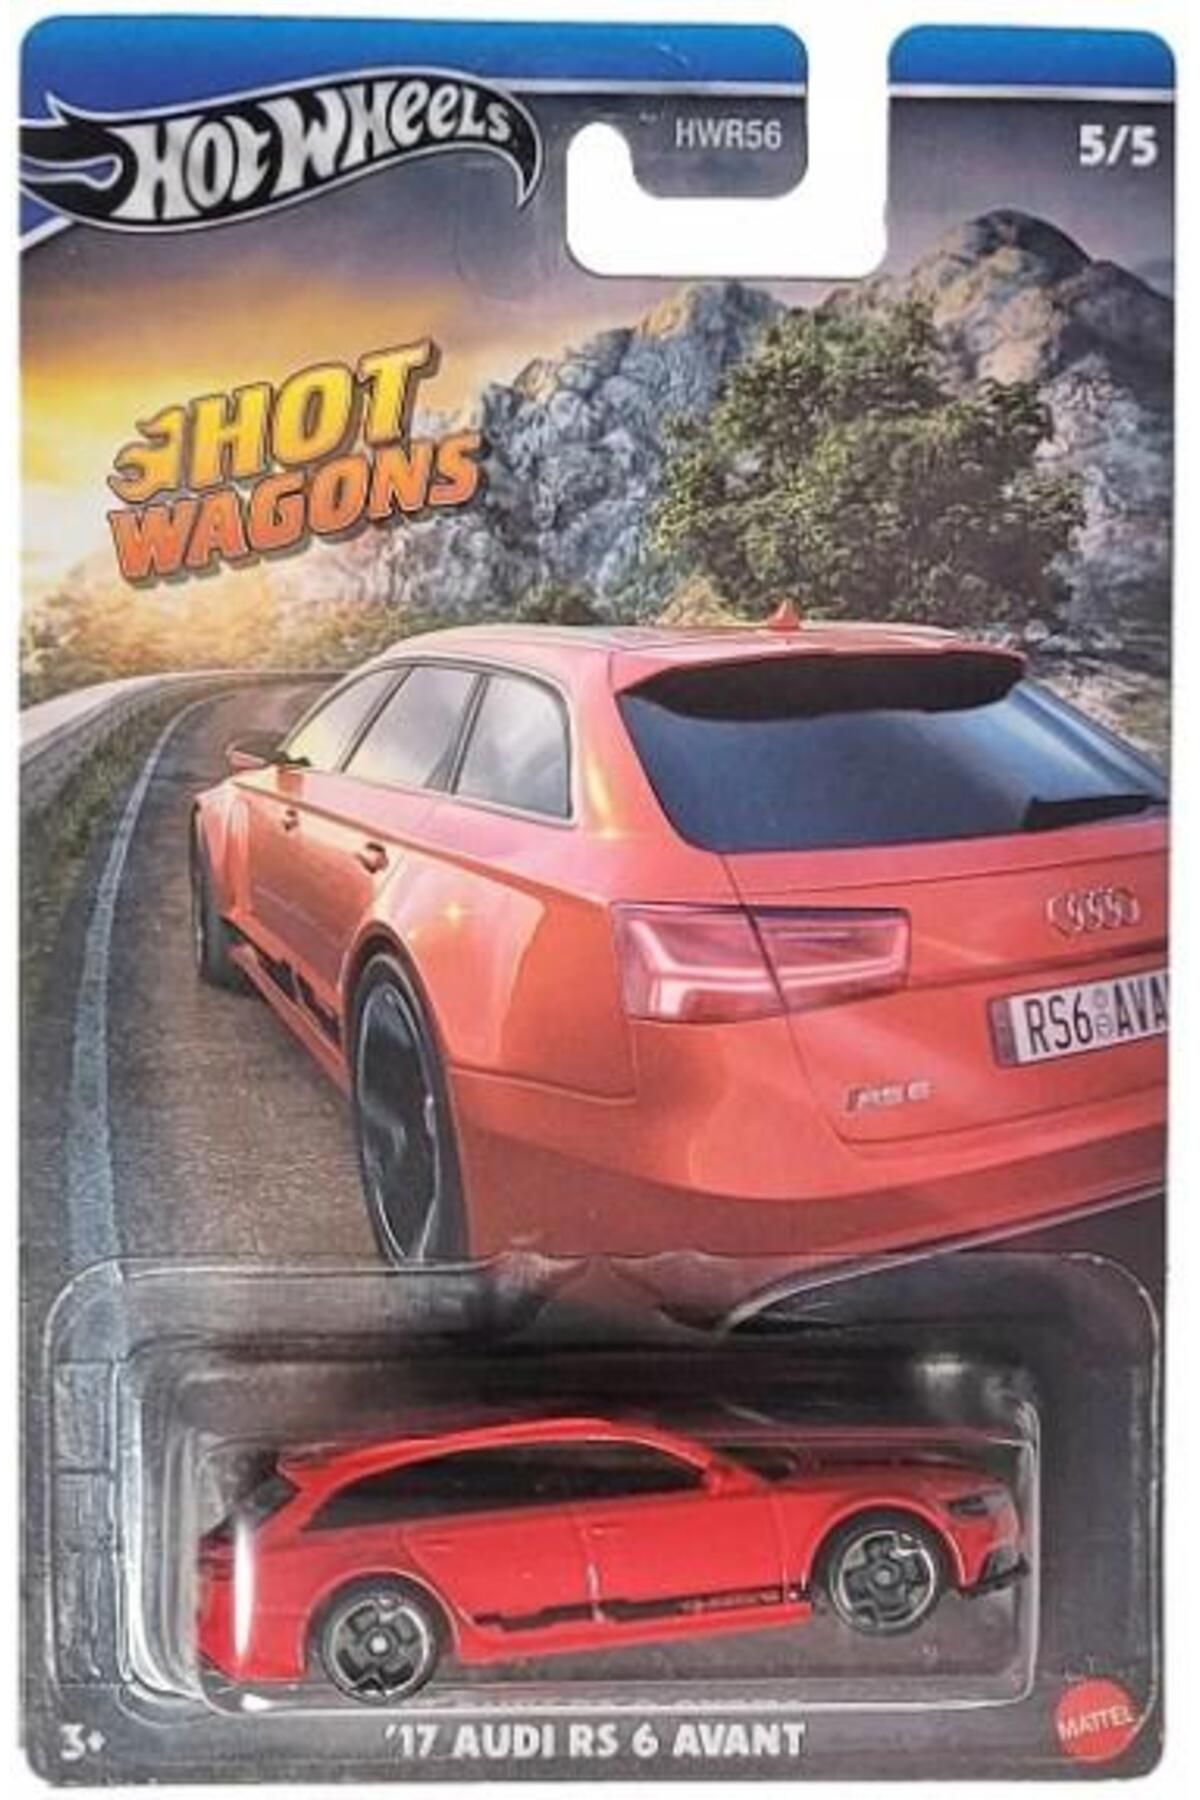 HOT WHEELS Premium Hot Wagons '17 Audi RS 6 Avant HRR85